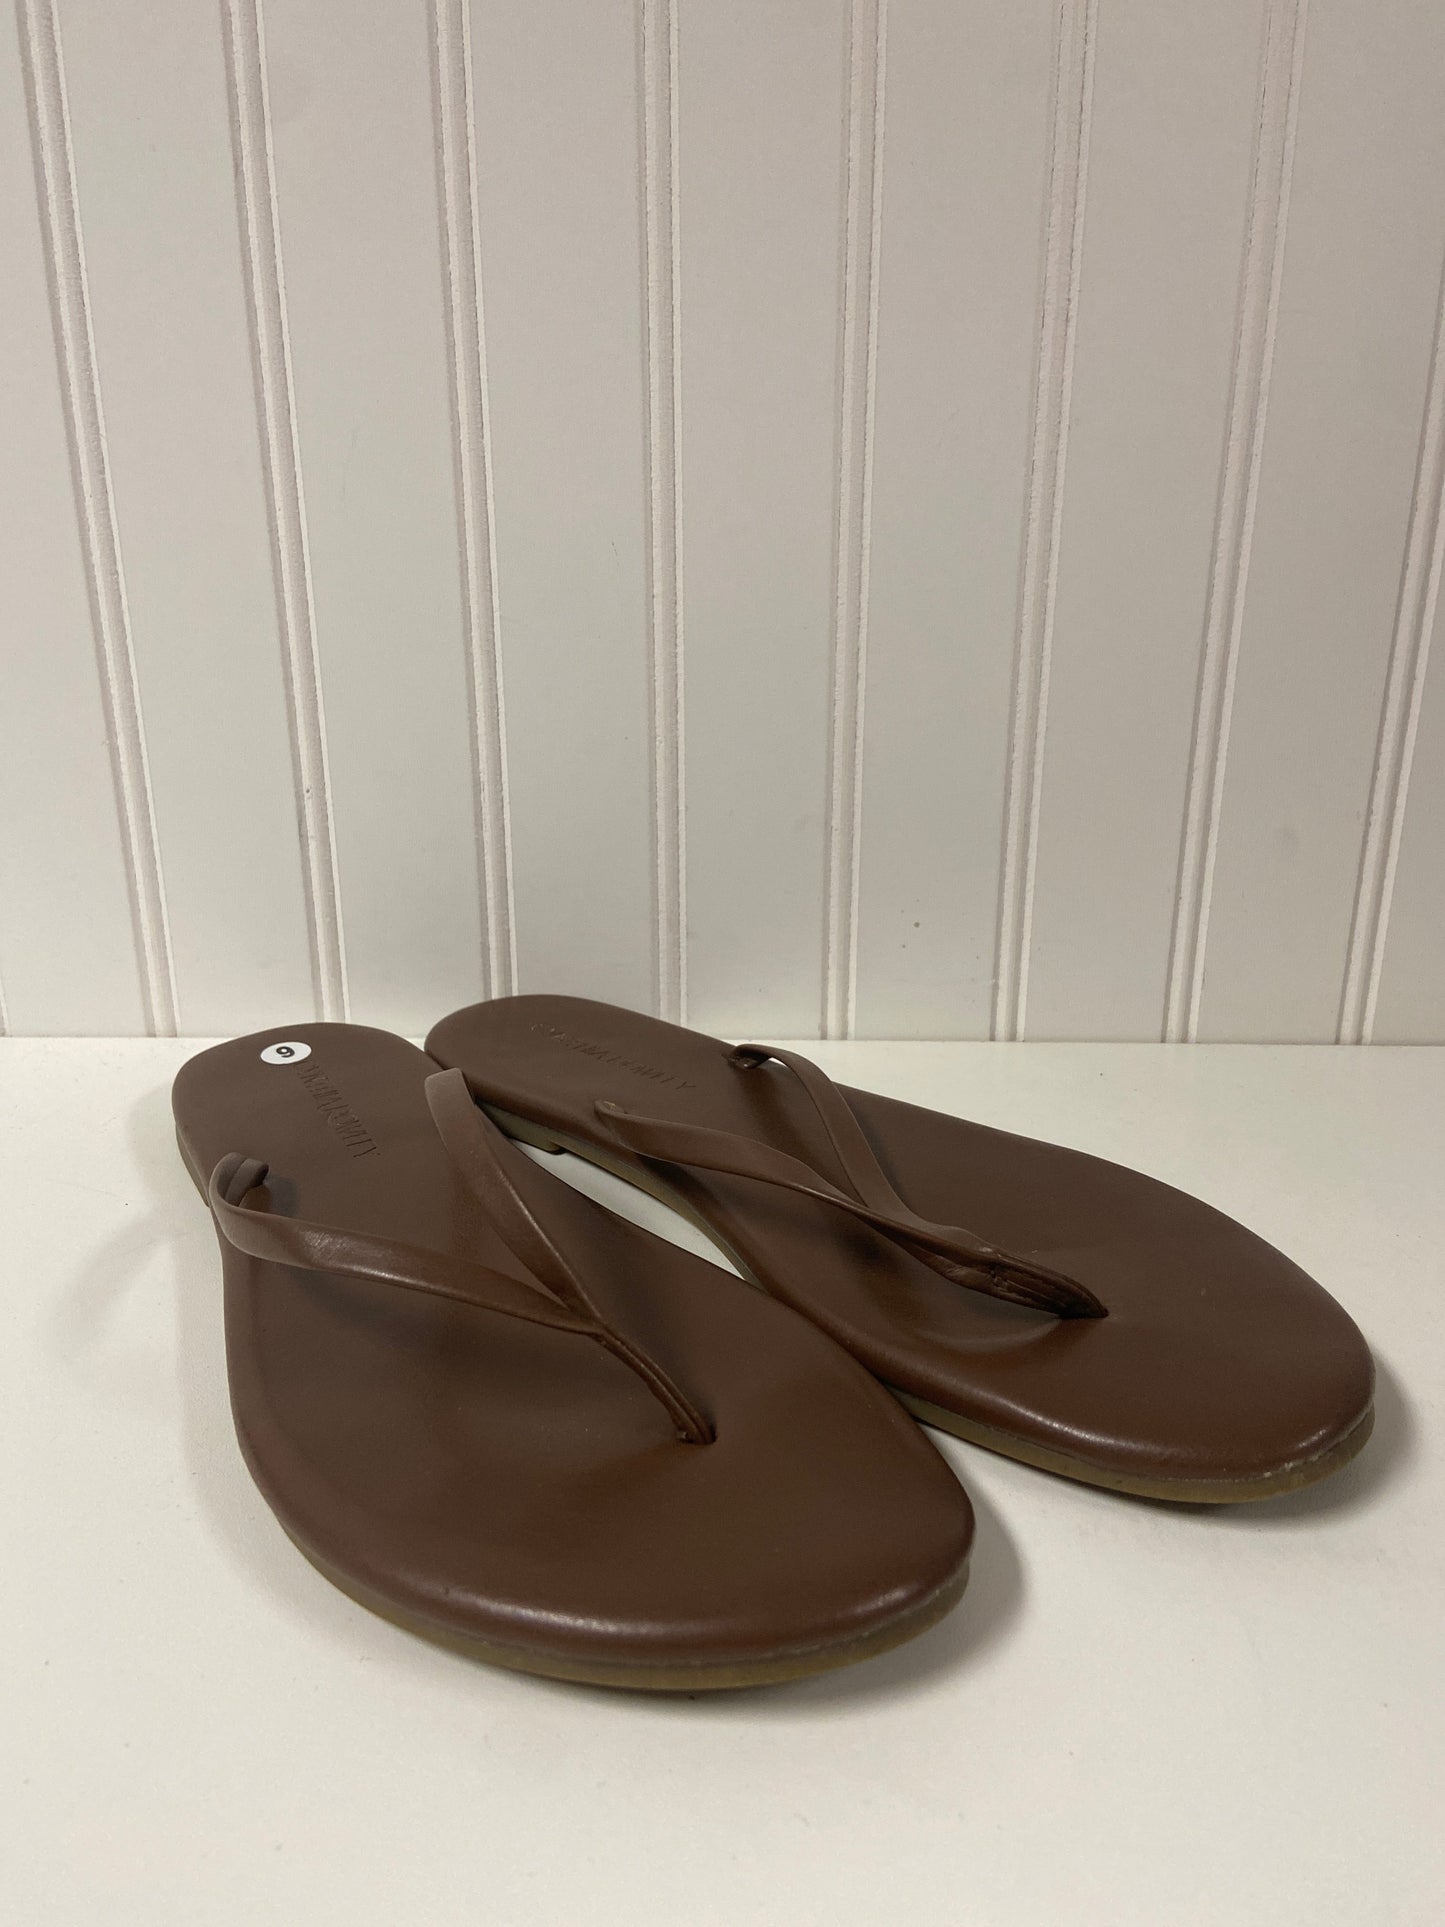 Brown Sandals Flip Flops Cynthia Rowley, Size 9